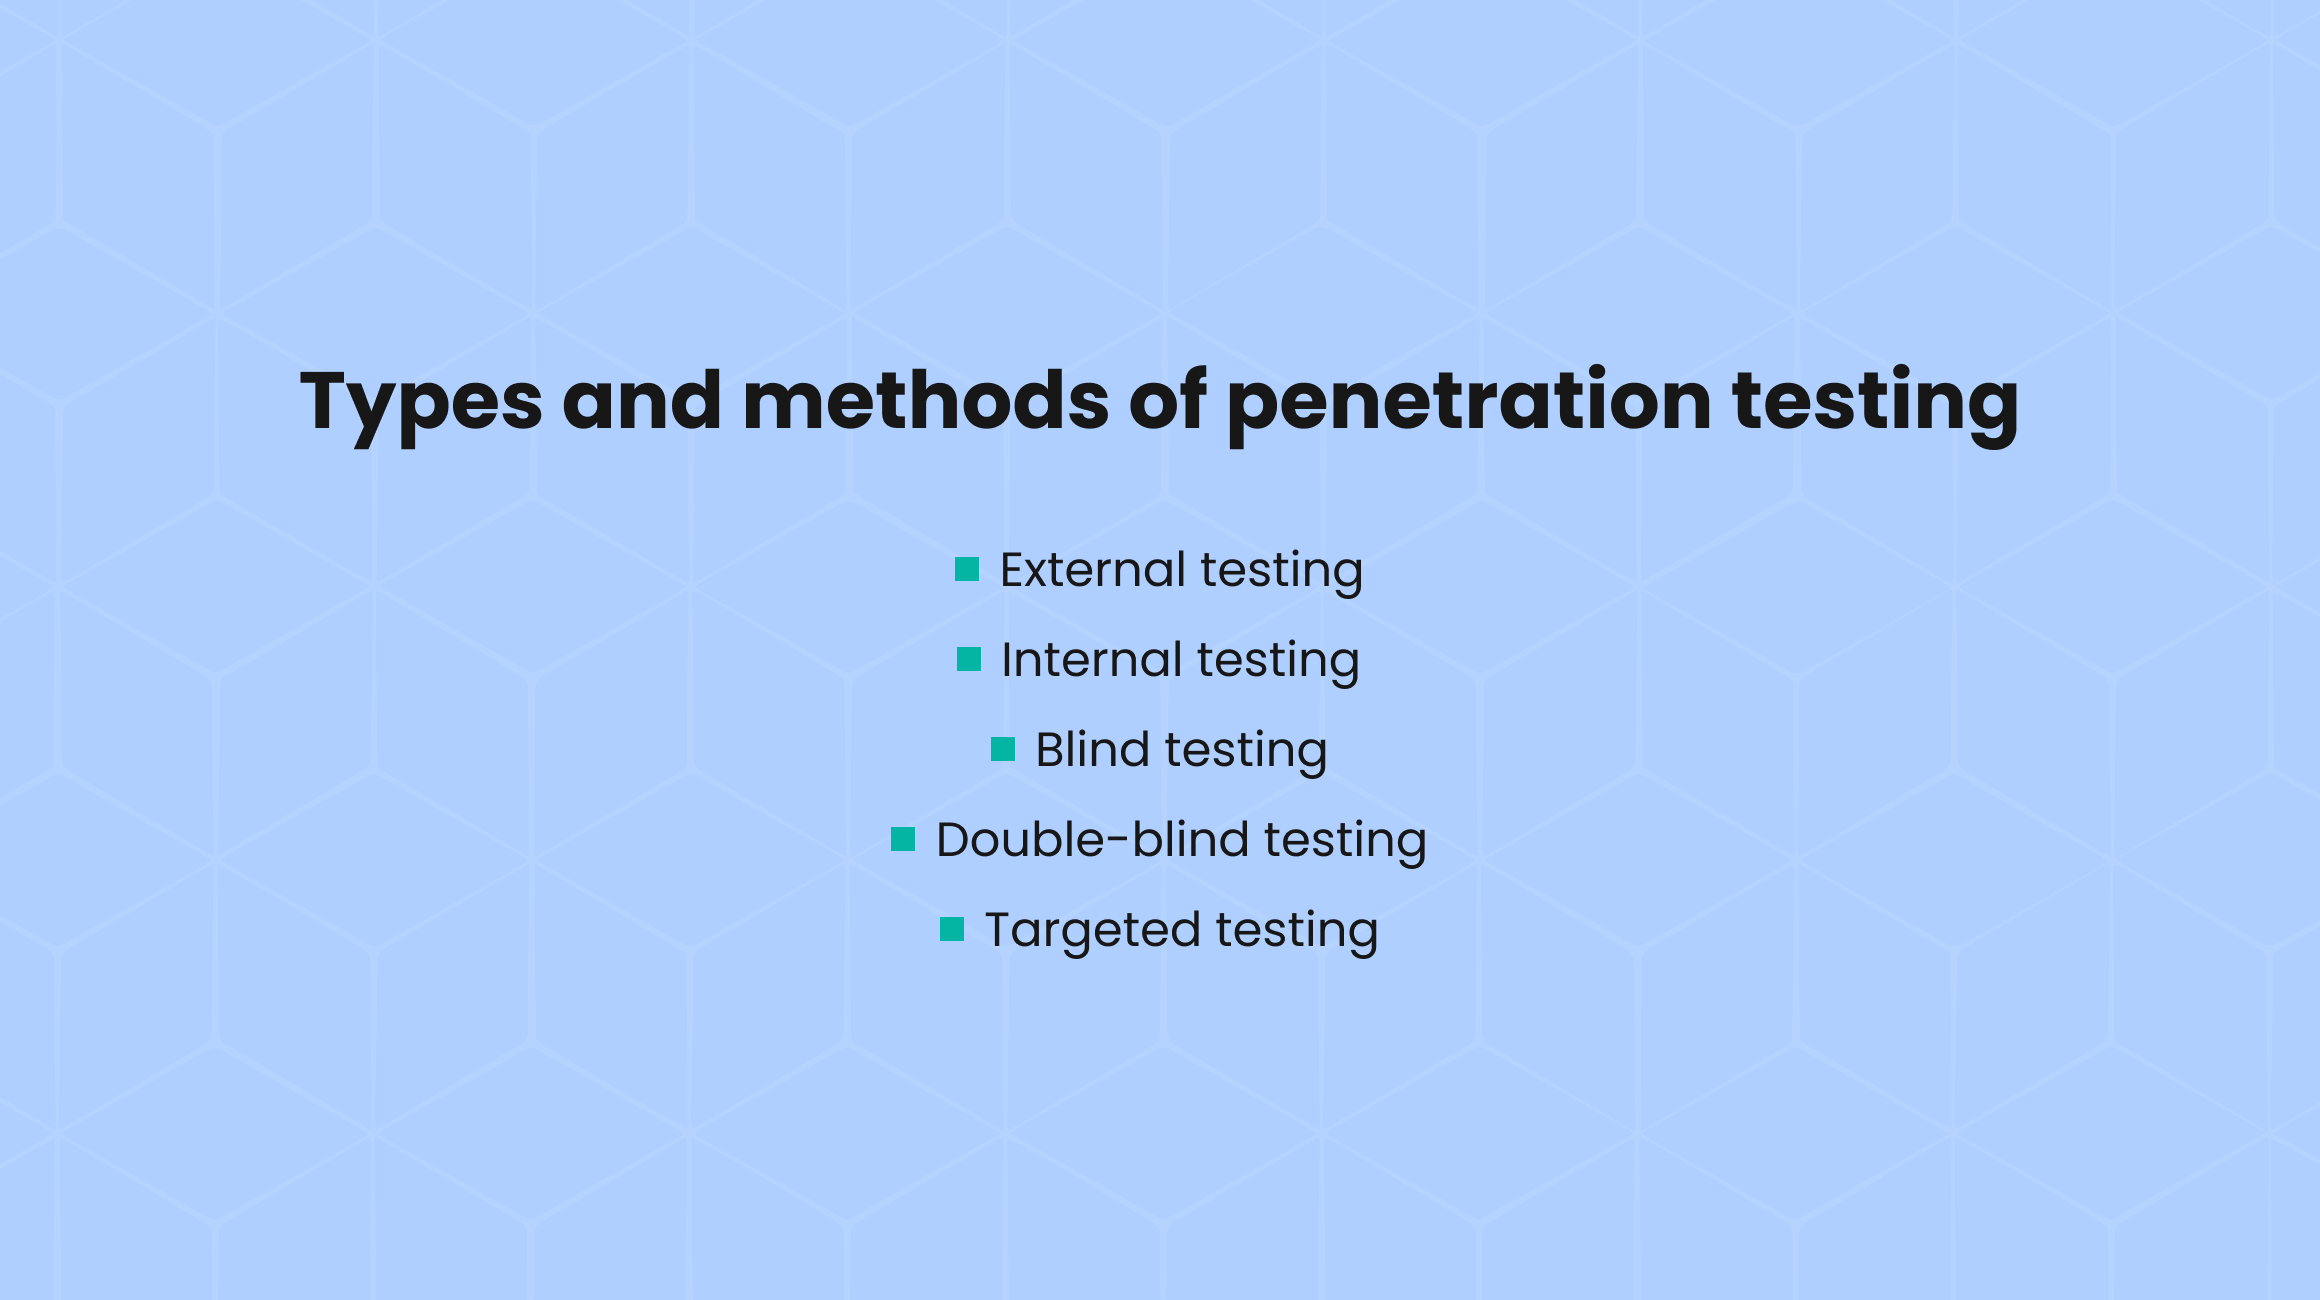 Methods of penetration testing